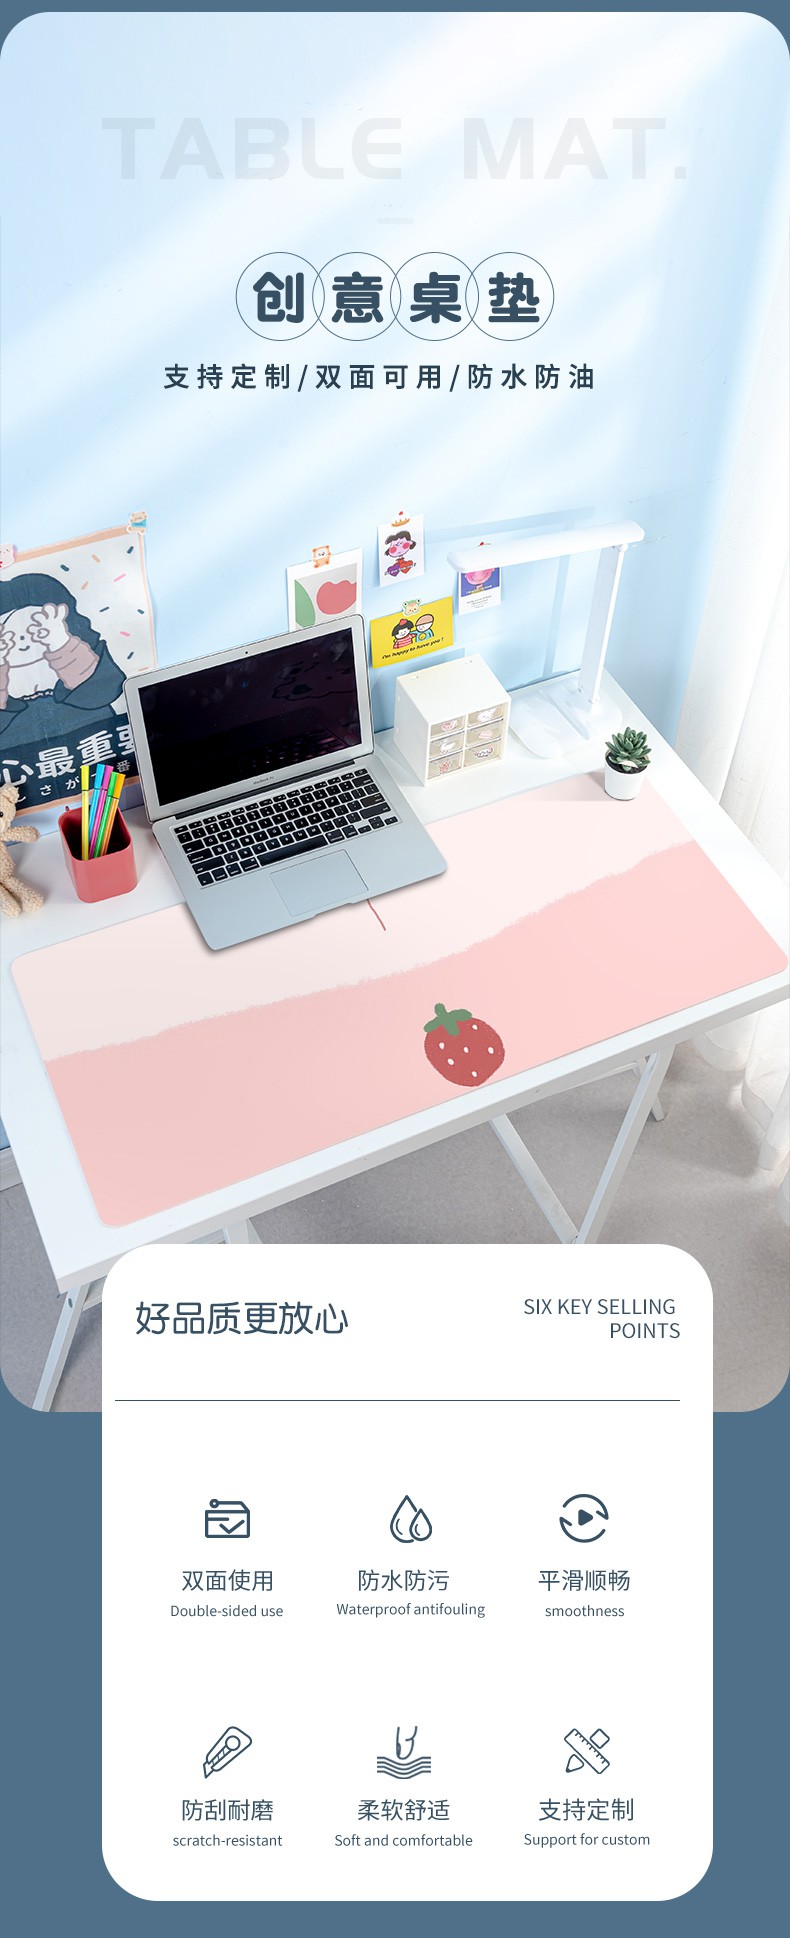 Waterproof Leather Oversized Mouse Pad Laptop Keyboard Pad Desk Pad Student Study Desk Mat Office Desktop Home Customiza